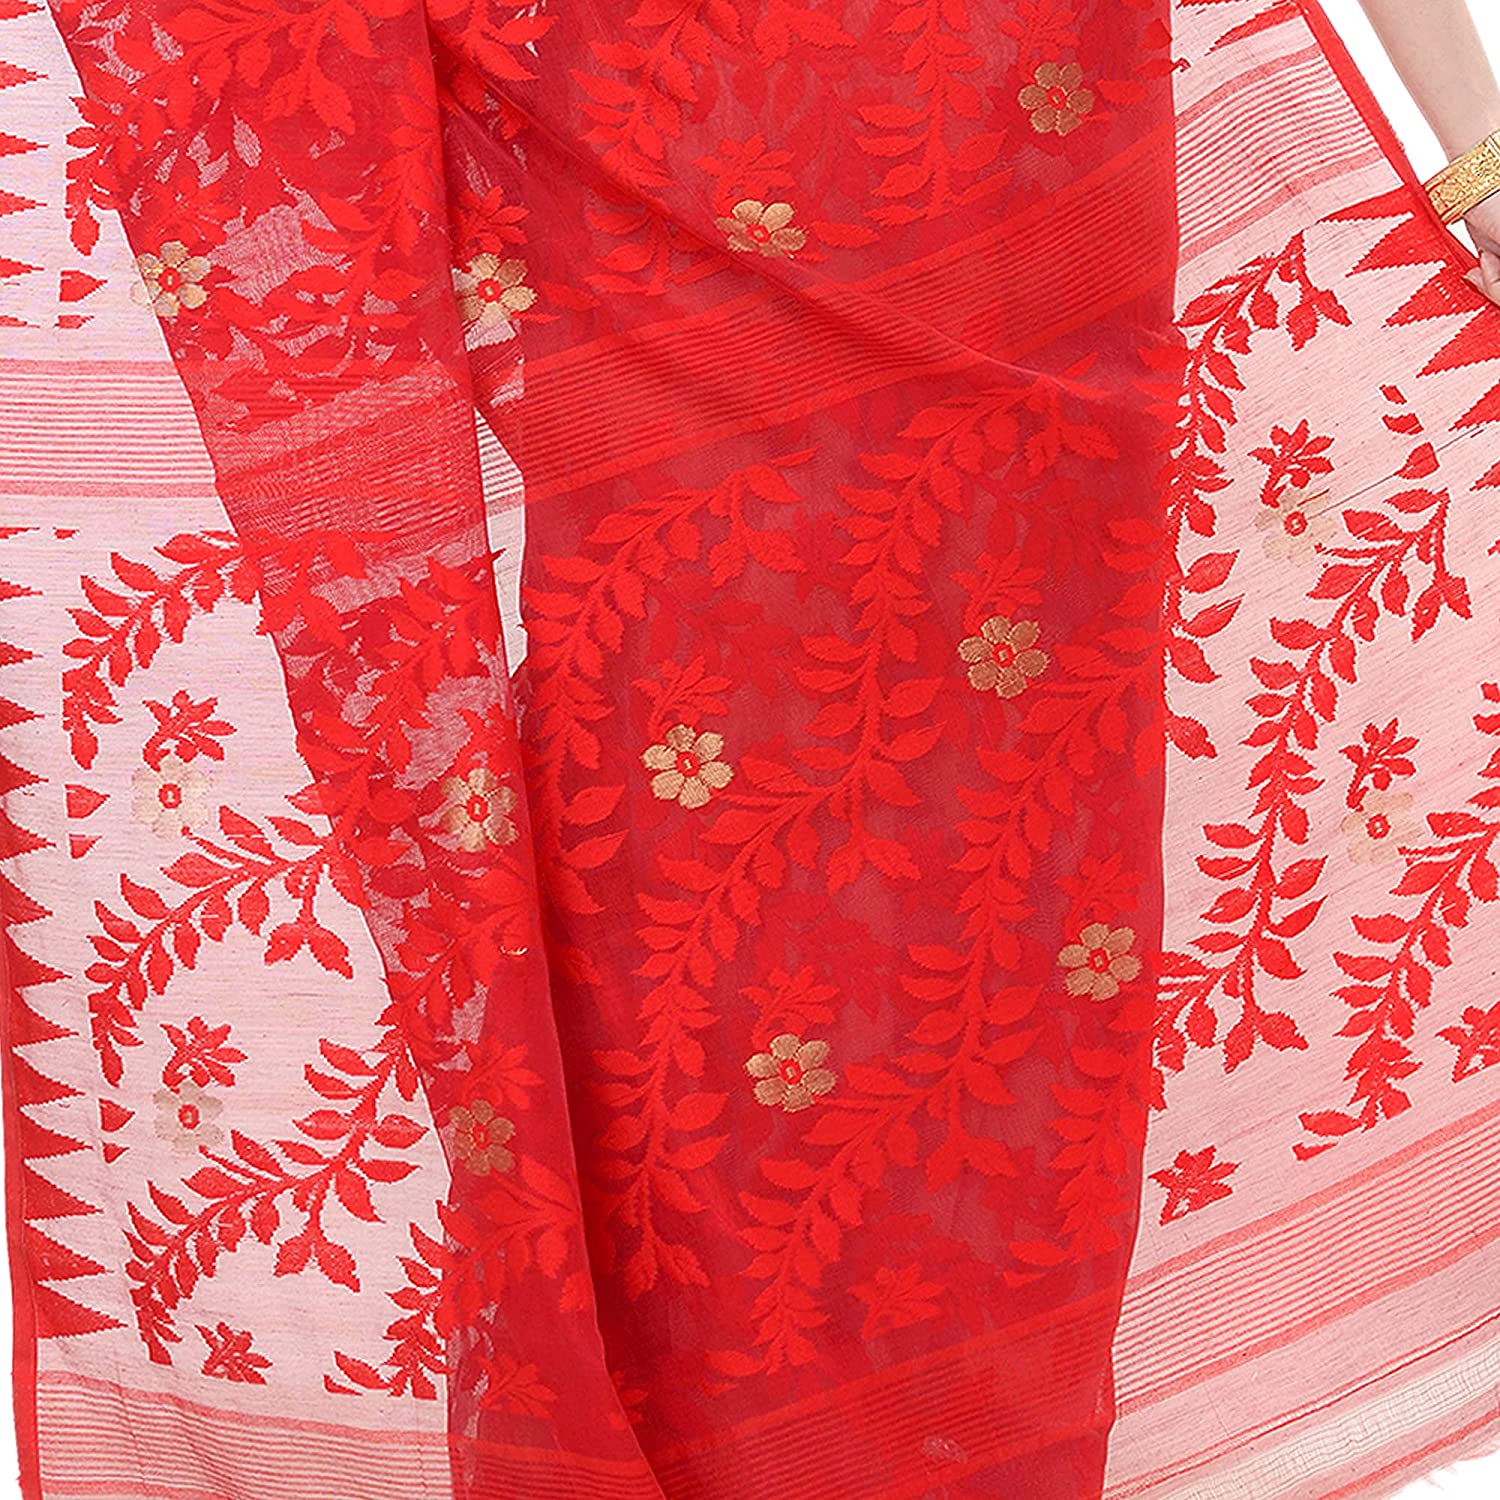 Women's Cotton Blend Handloom Red White Jamdani Saree - Piyari Fashion